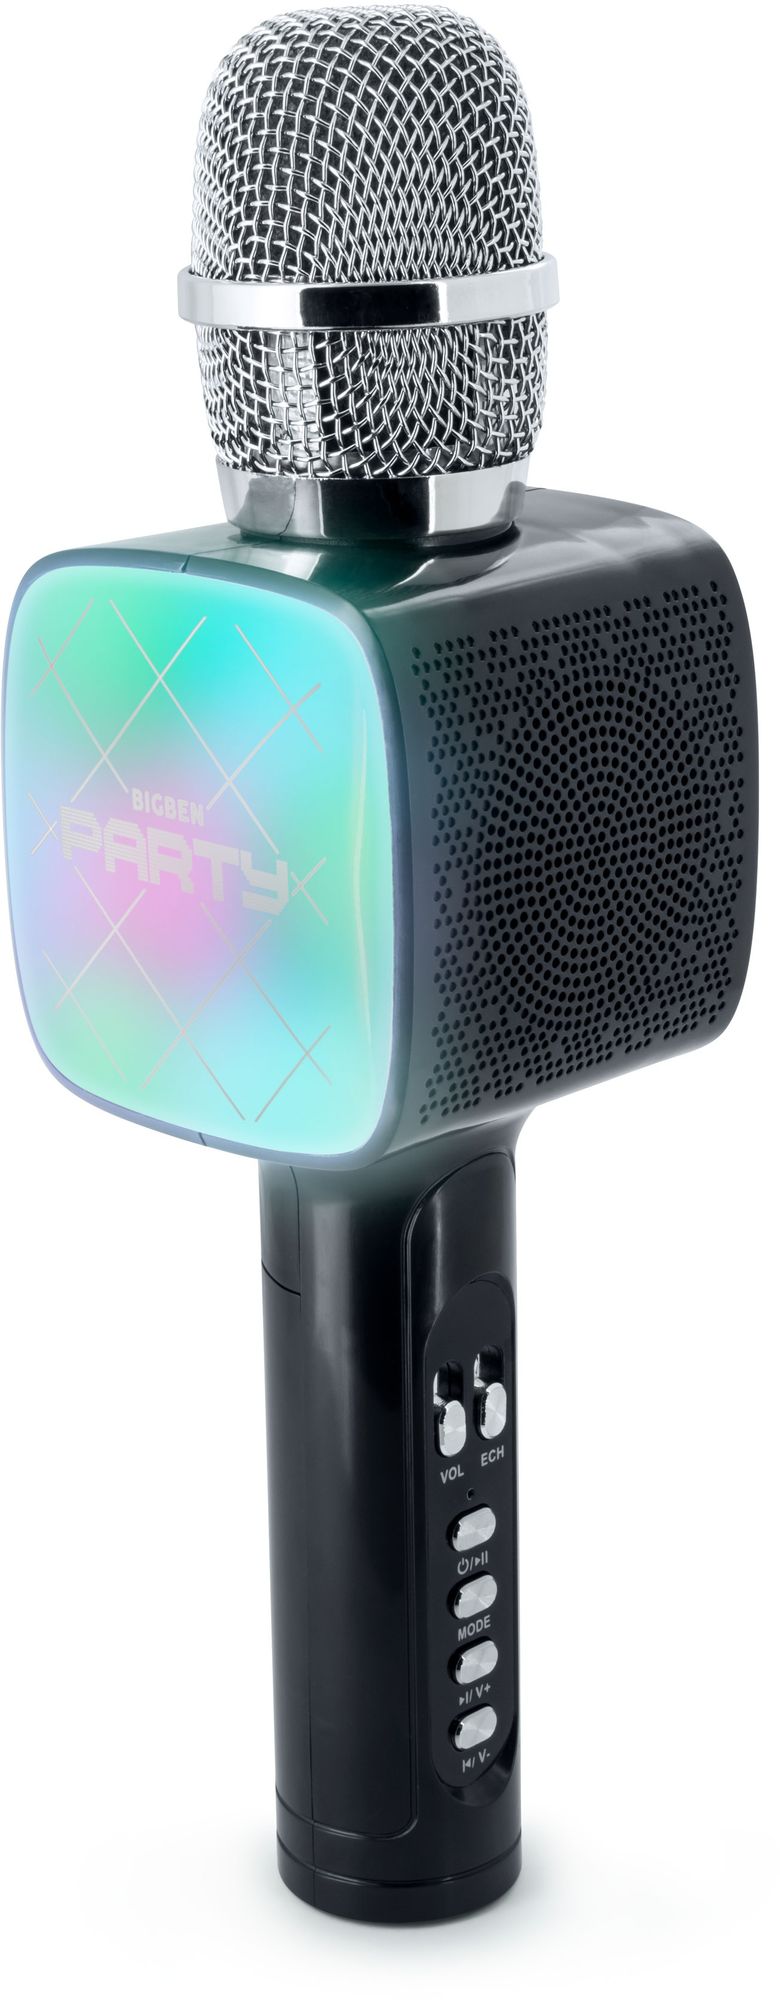 BTMIC - online with black - - Effects Wireless + Bigben PARTY Speaker Light Microphone bestellen